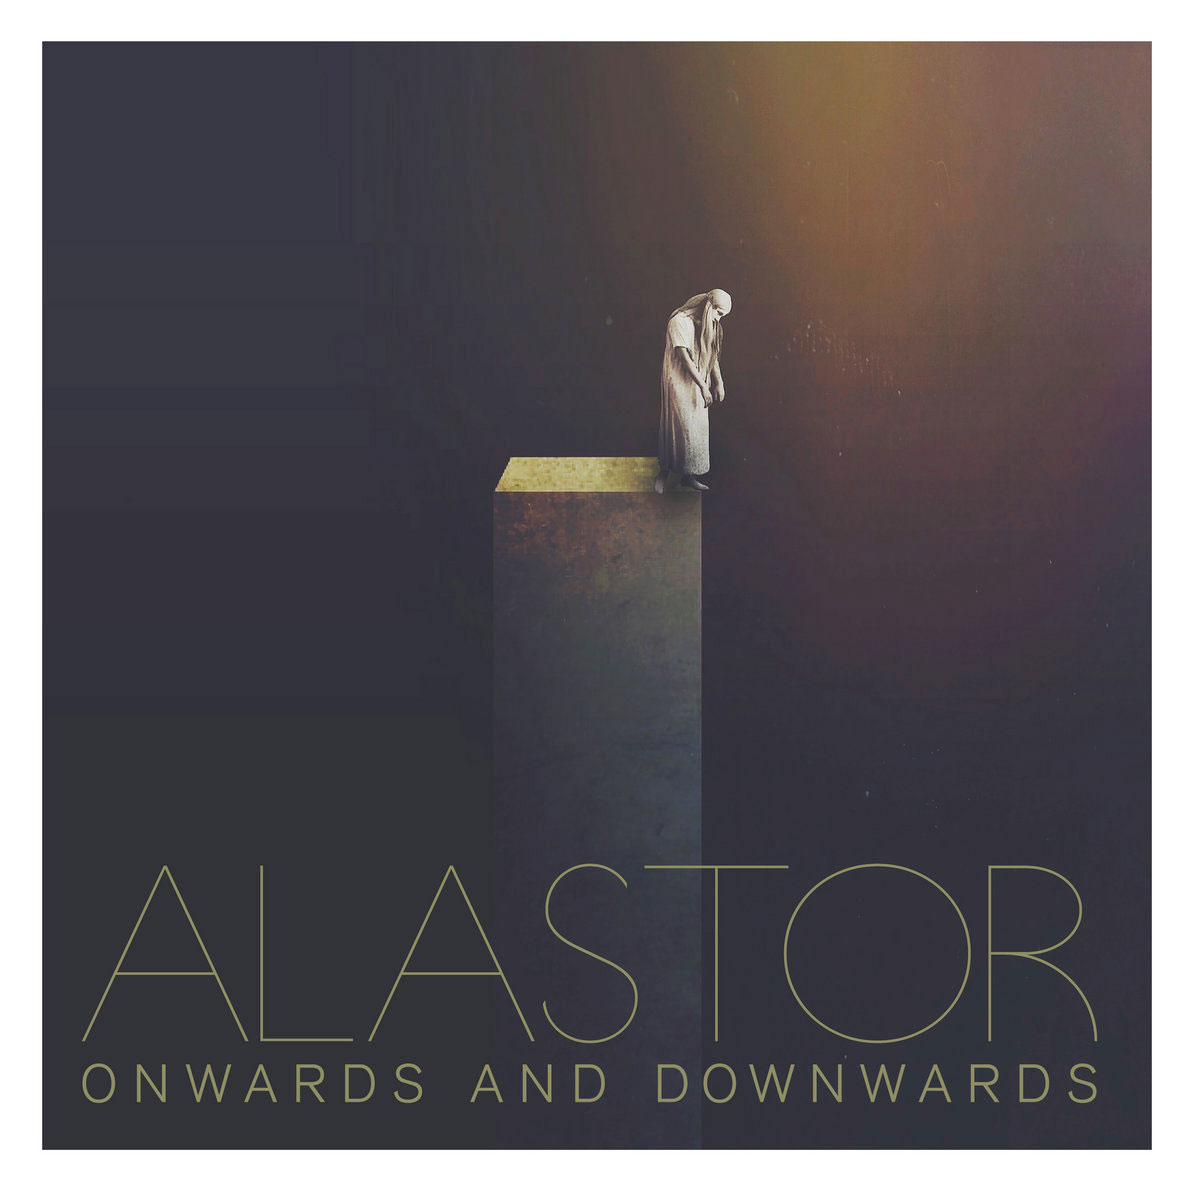 Onwards and Downwards by Alastor